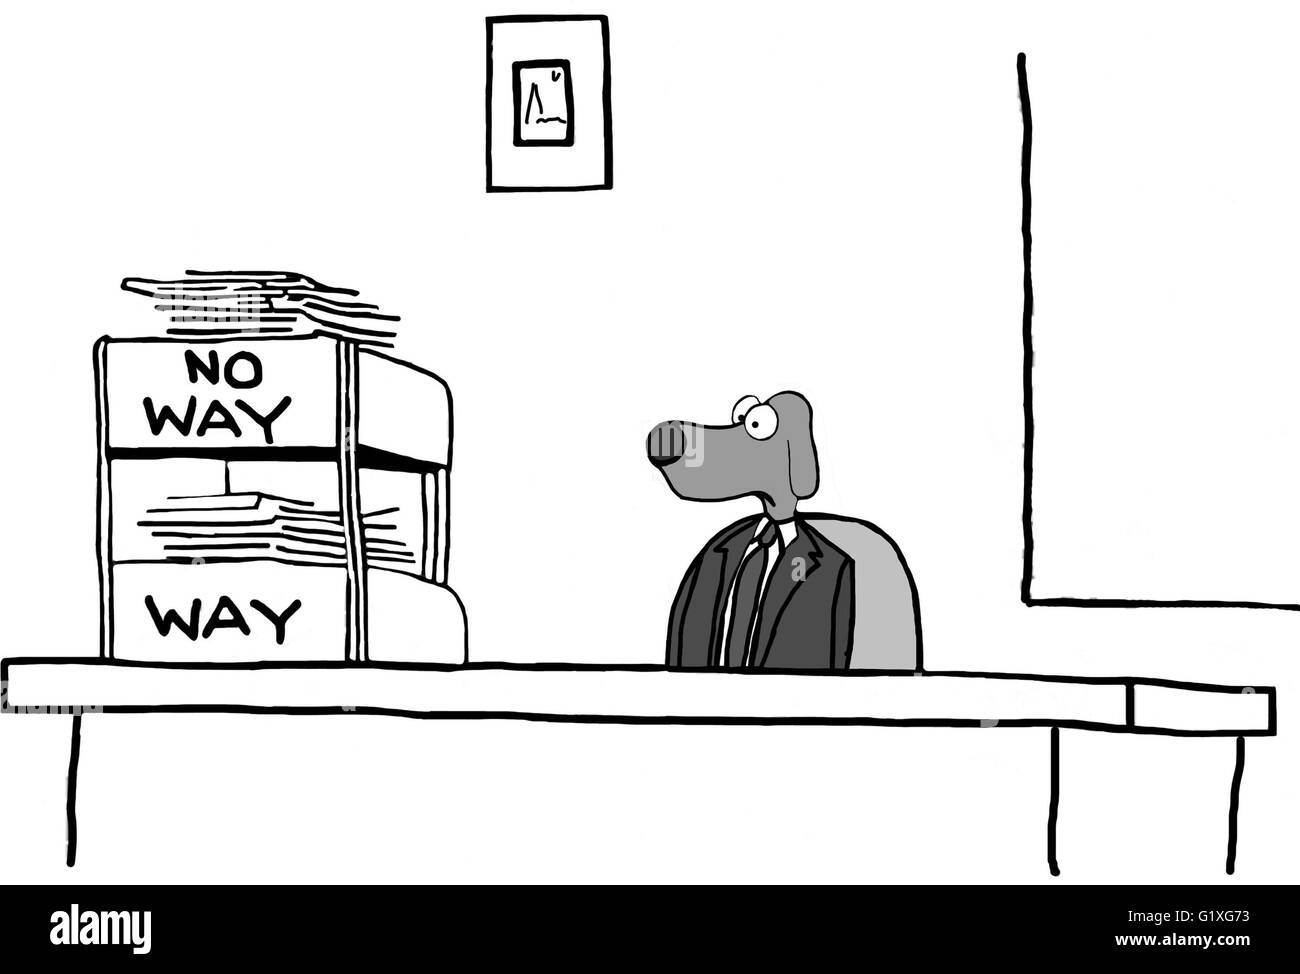 Business cartoon about analysis paralysis. Stock Illustration